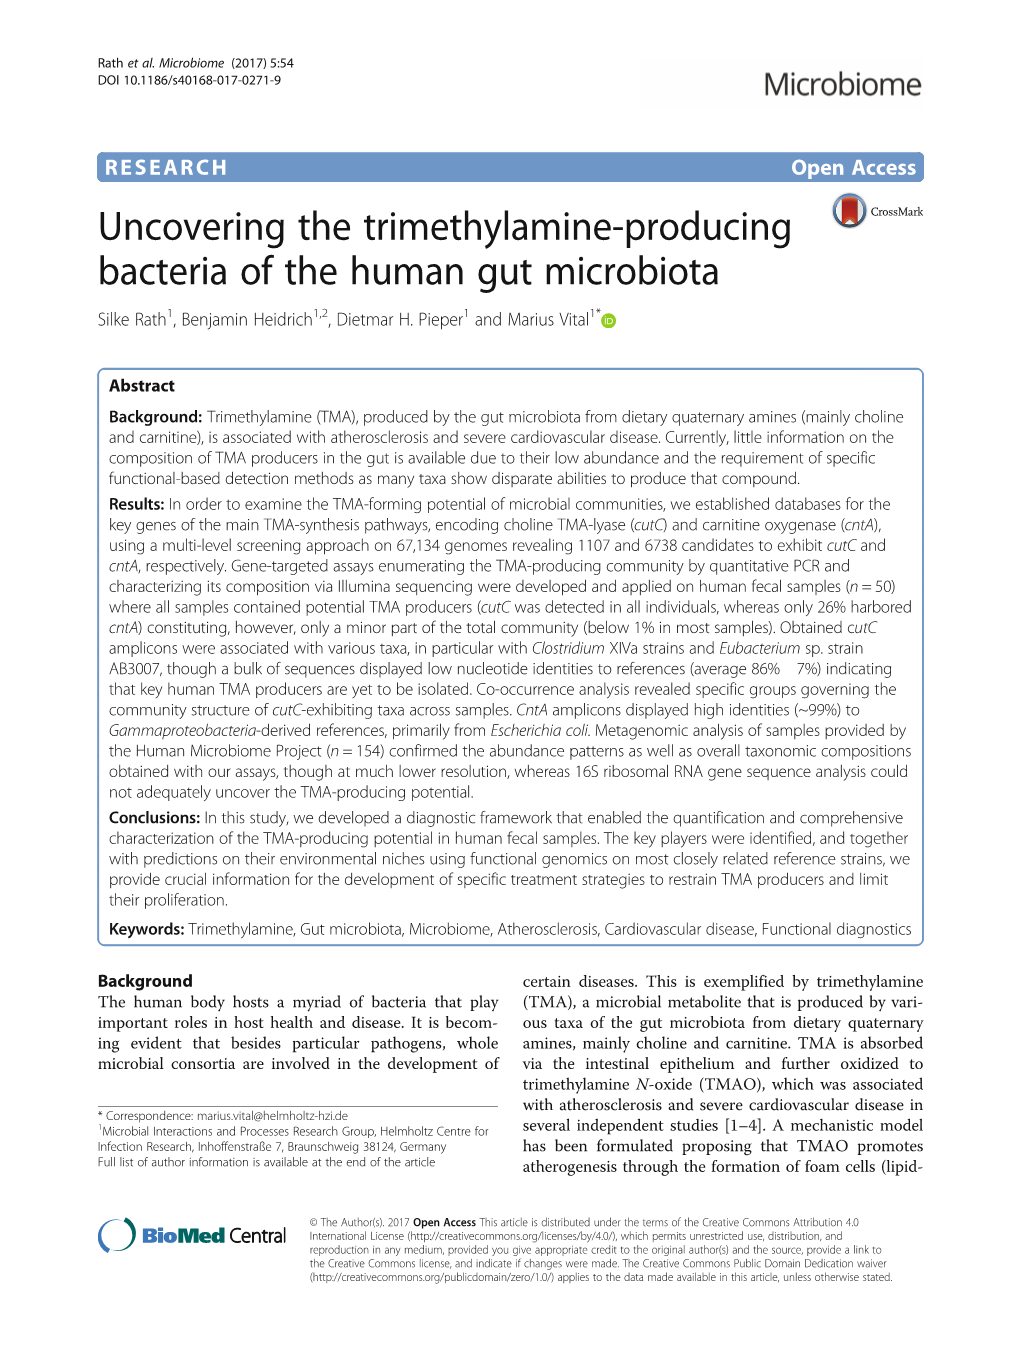 Uncovering the Trimethylamine-Producing Bacteria of the Human Gut Microbiota Silke Rath1, Benjamin Heidrich1,2, Dietmar H